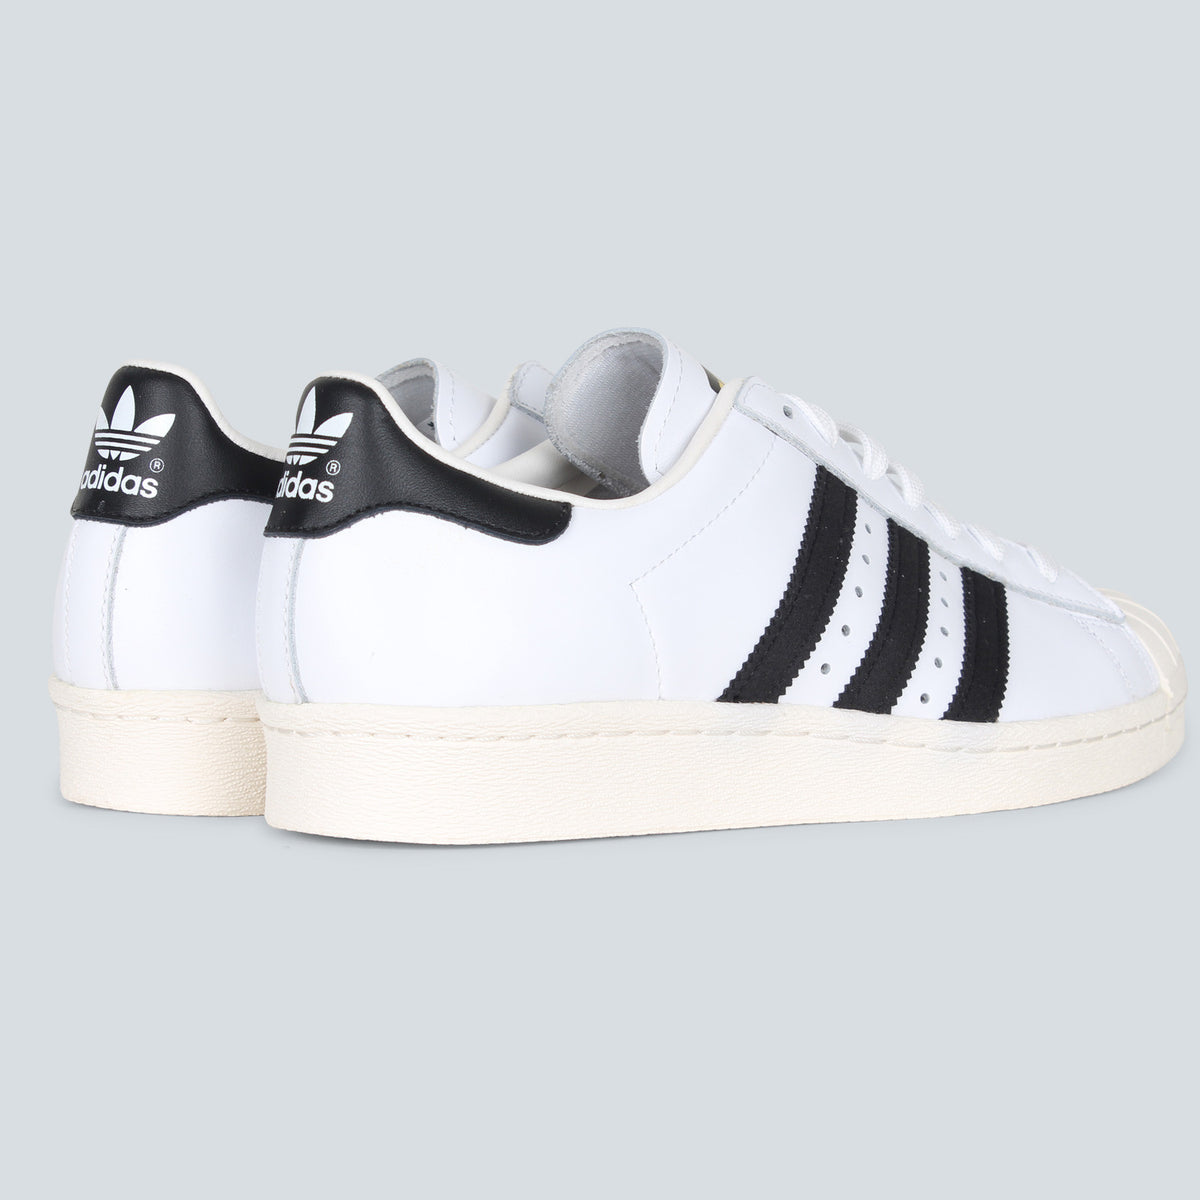 Adidas Originals - Superstar 80's - White / Black